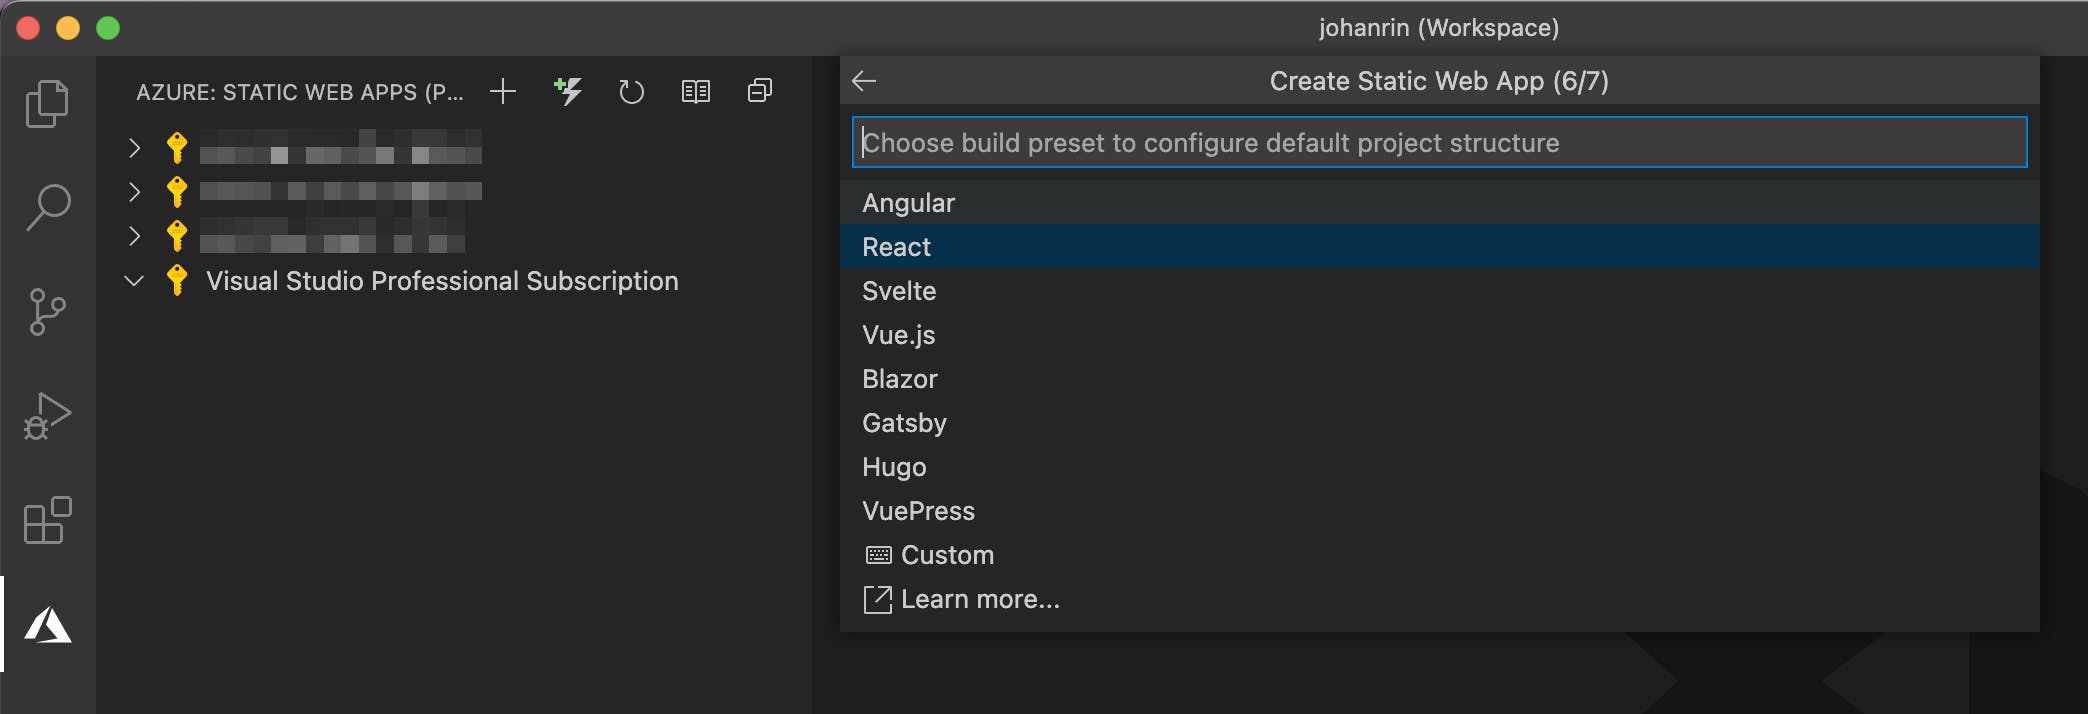 Select React as build preset